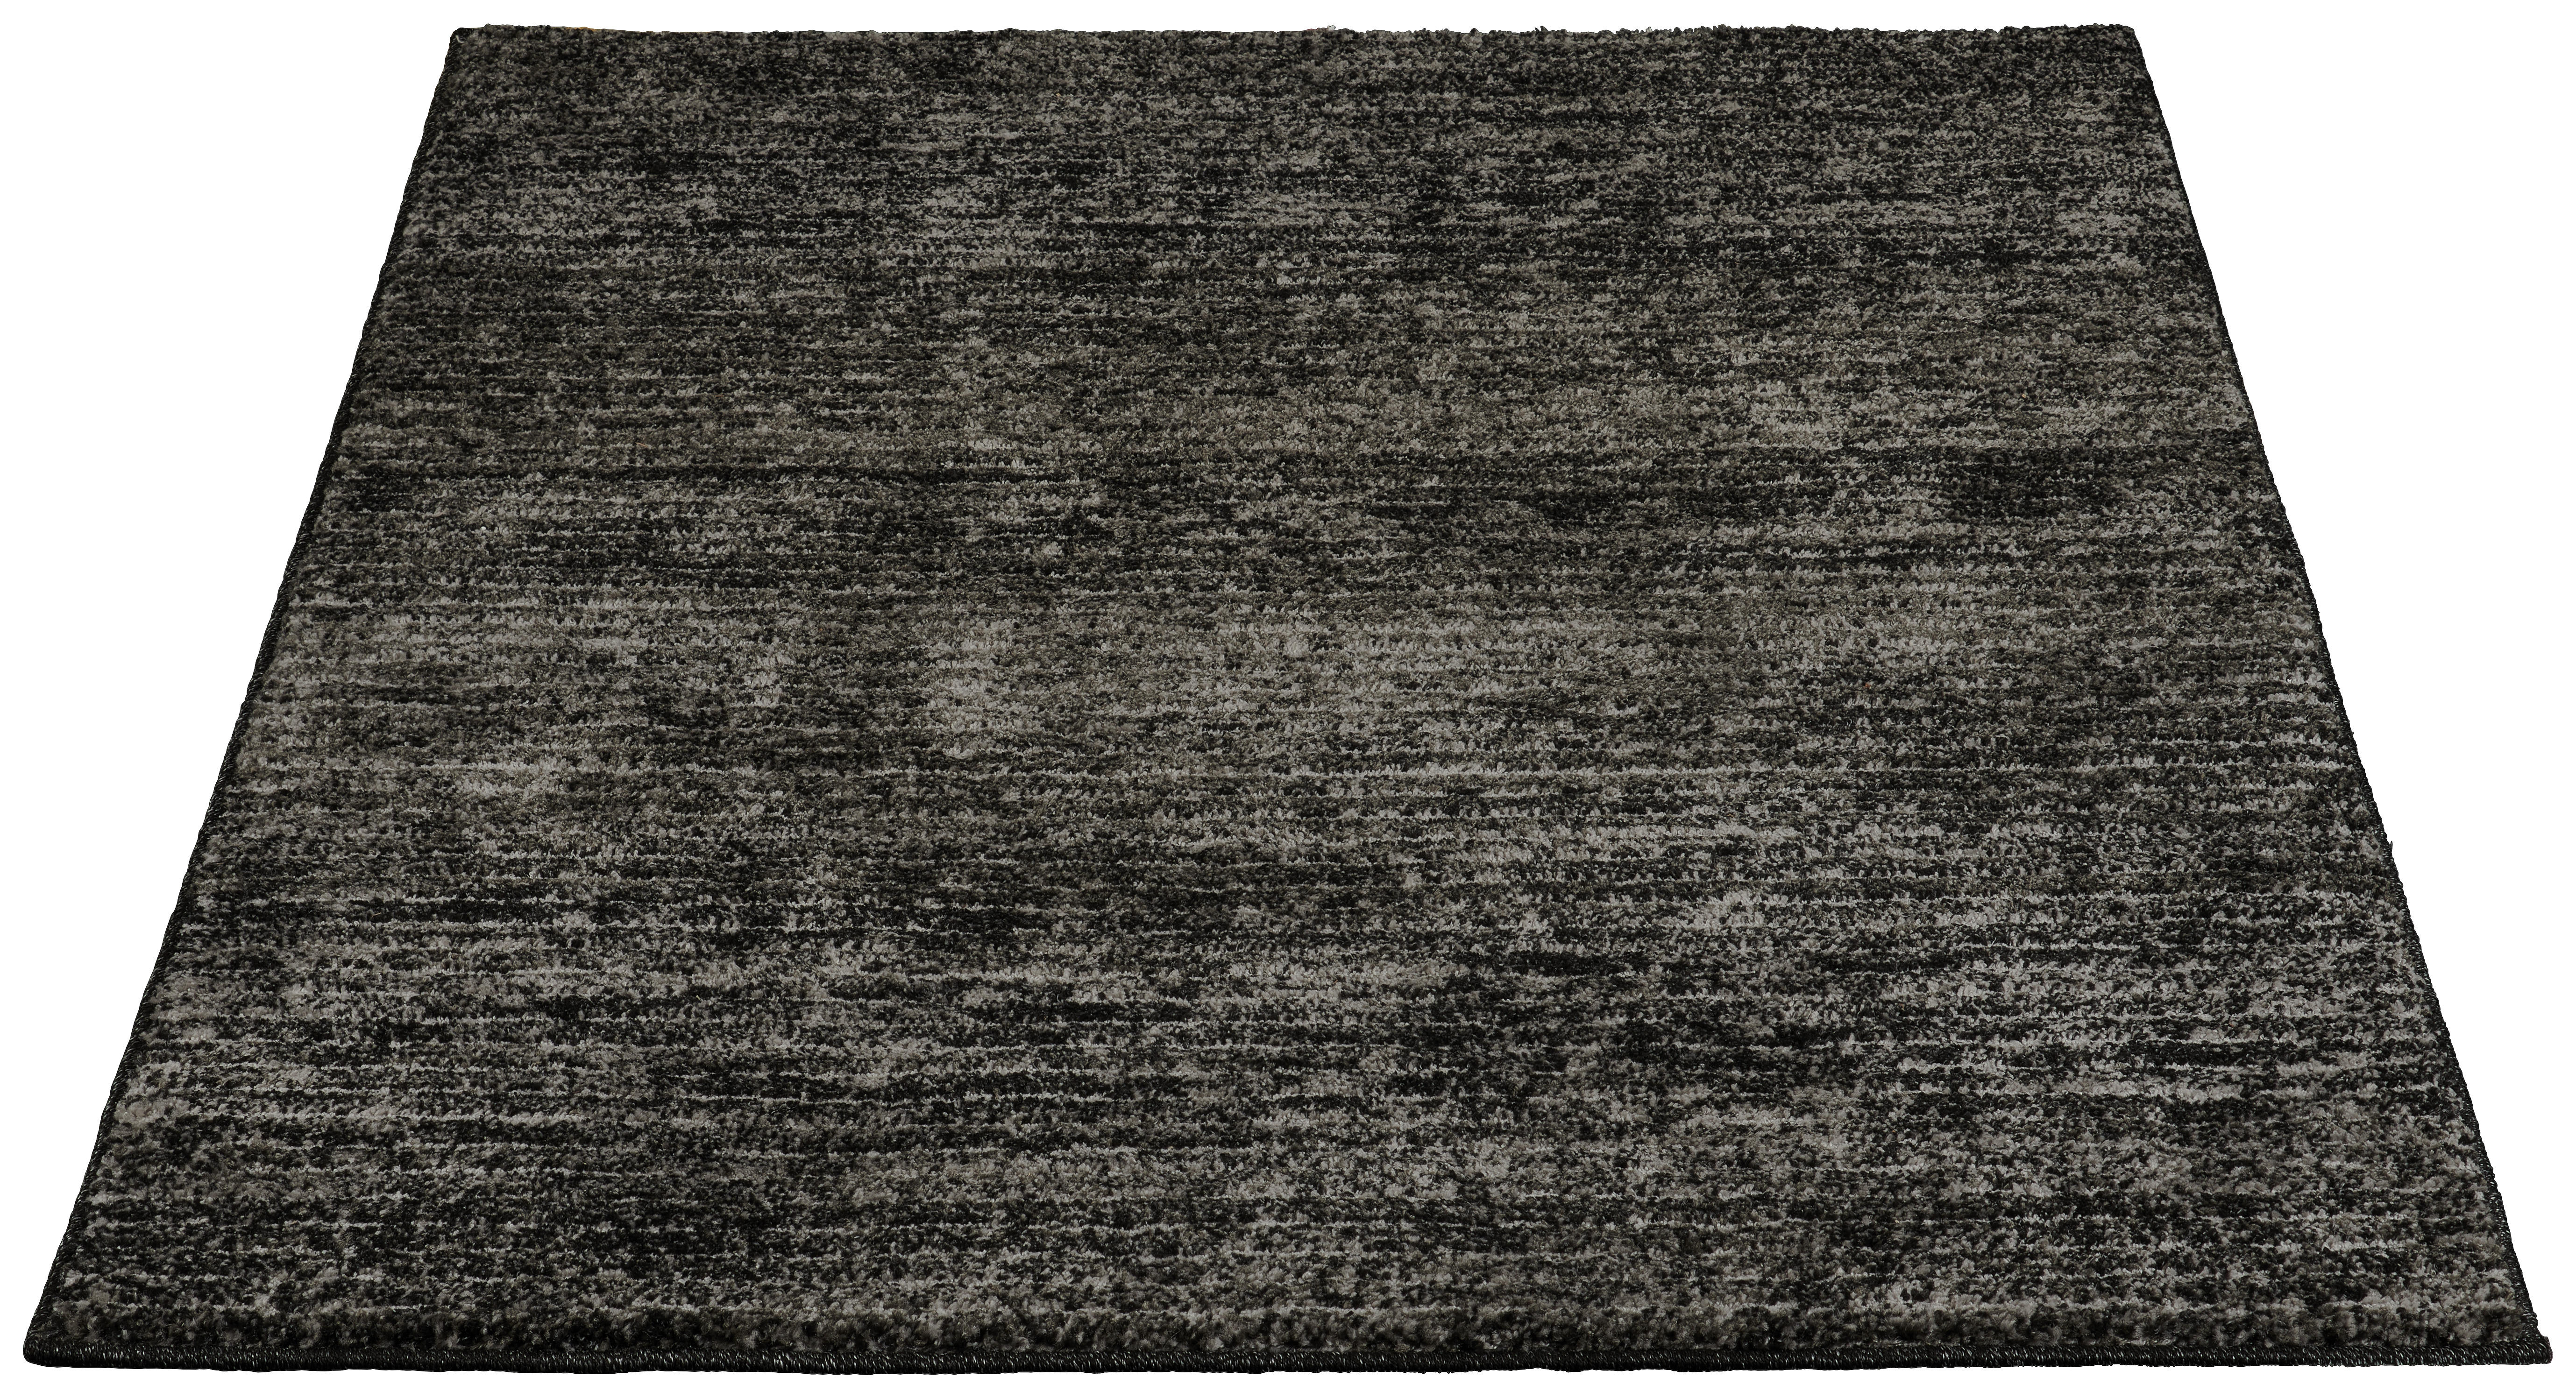 Hochflorteppich Mumbai schwarz B/L: ca. 200x290 cm Mumbai - schwarz/grau (200,00/290,00cm)